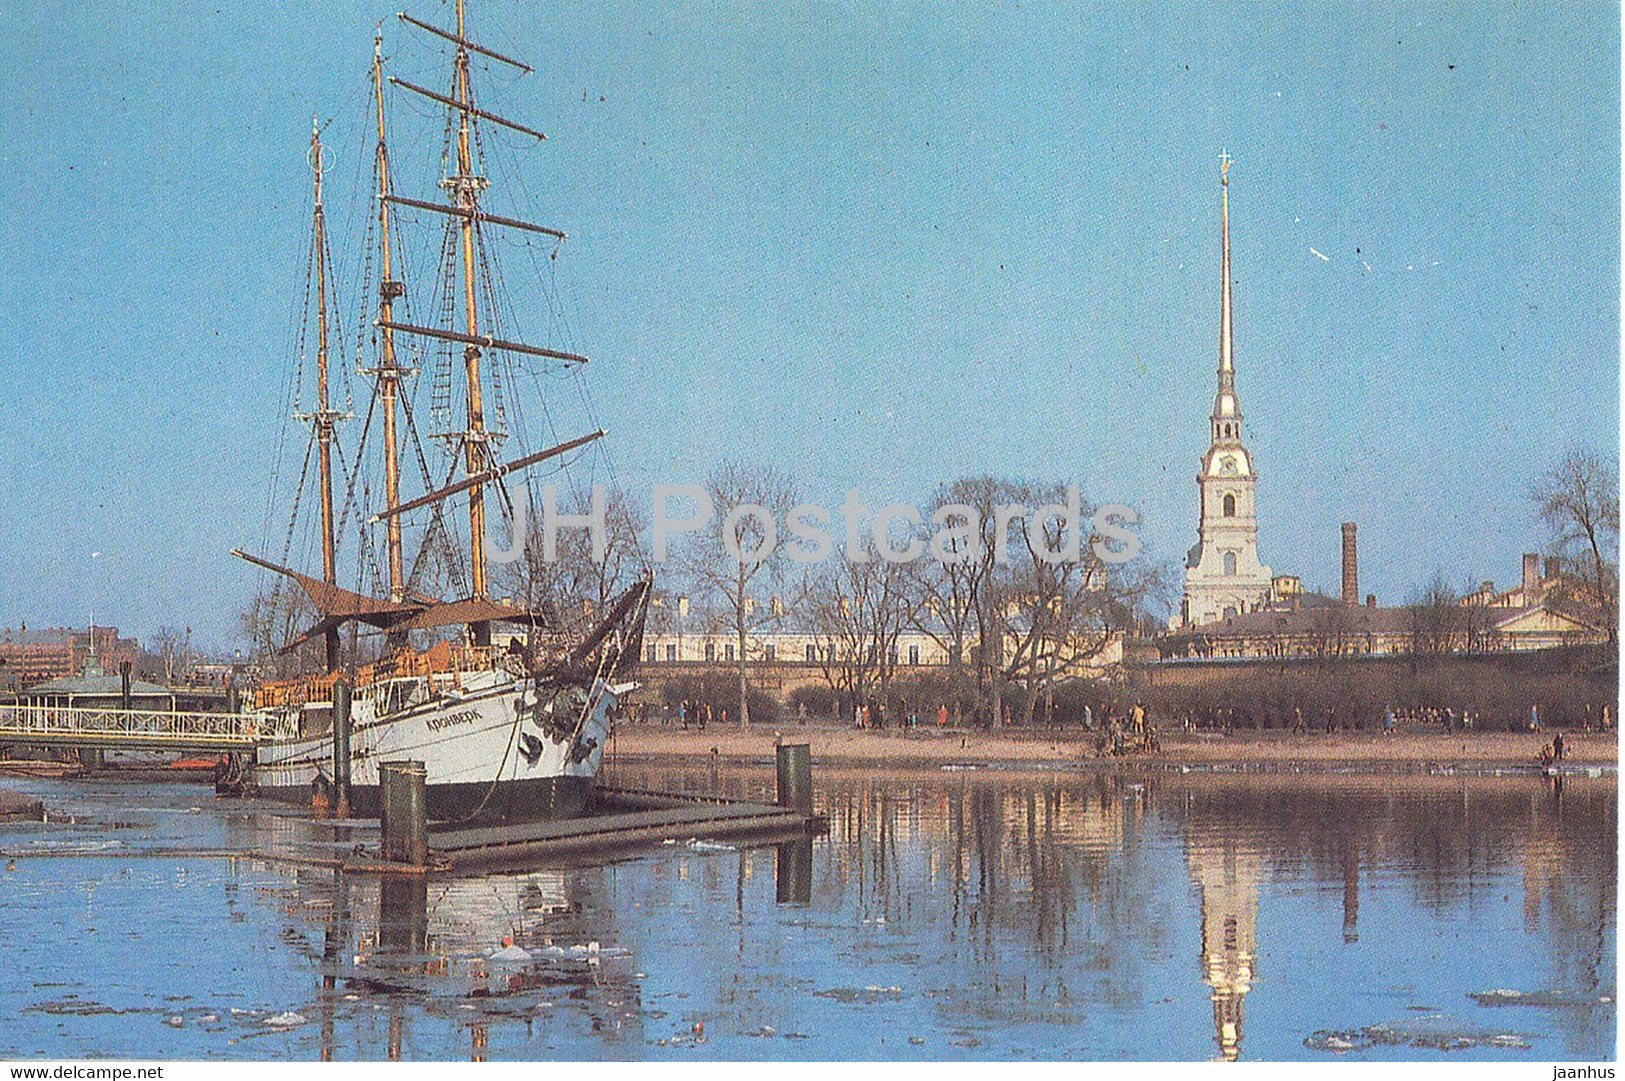 Leningrad - St Petersburg - Peter and Paul Cathedral from Kronverkskiy Protok - sailing ship 1992 - Russia USSR - unused - JH Postcards